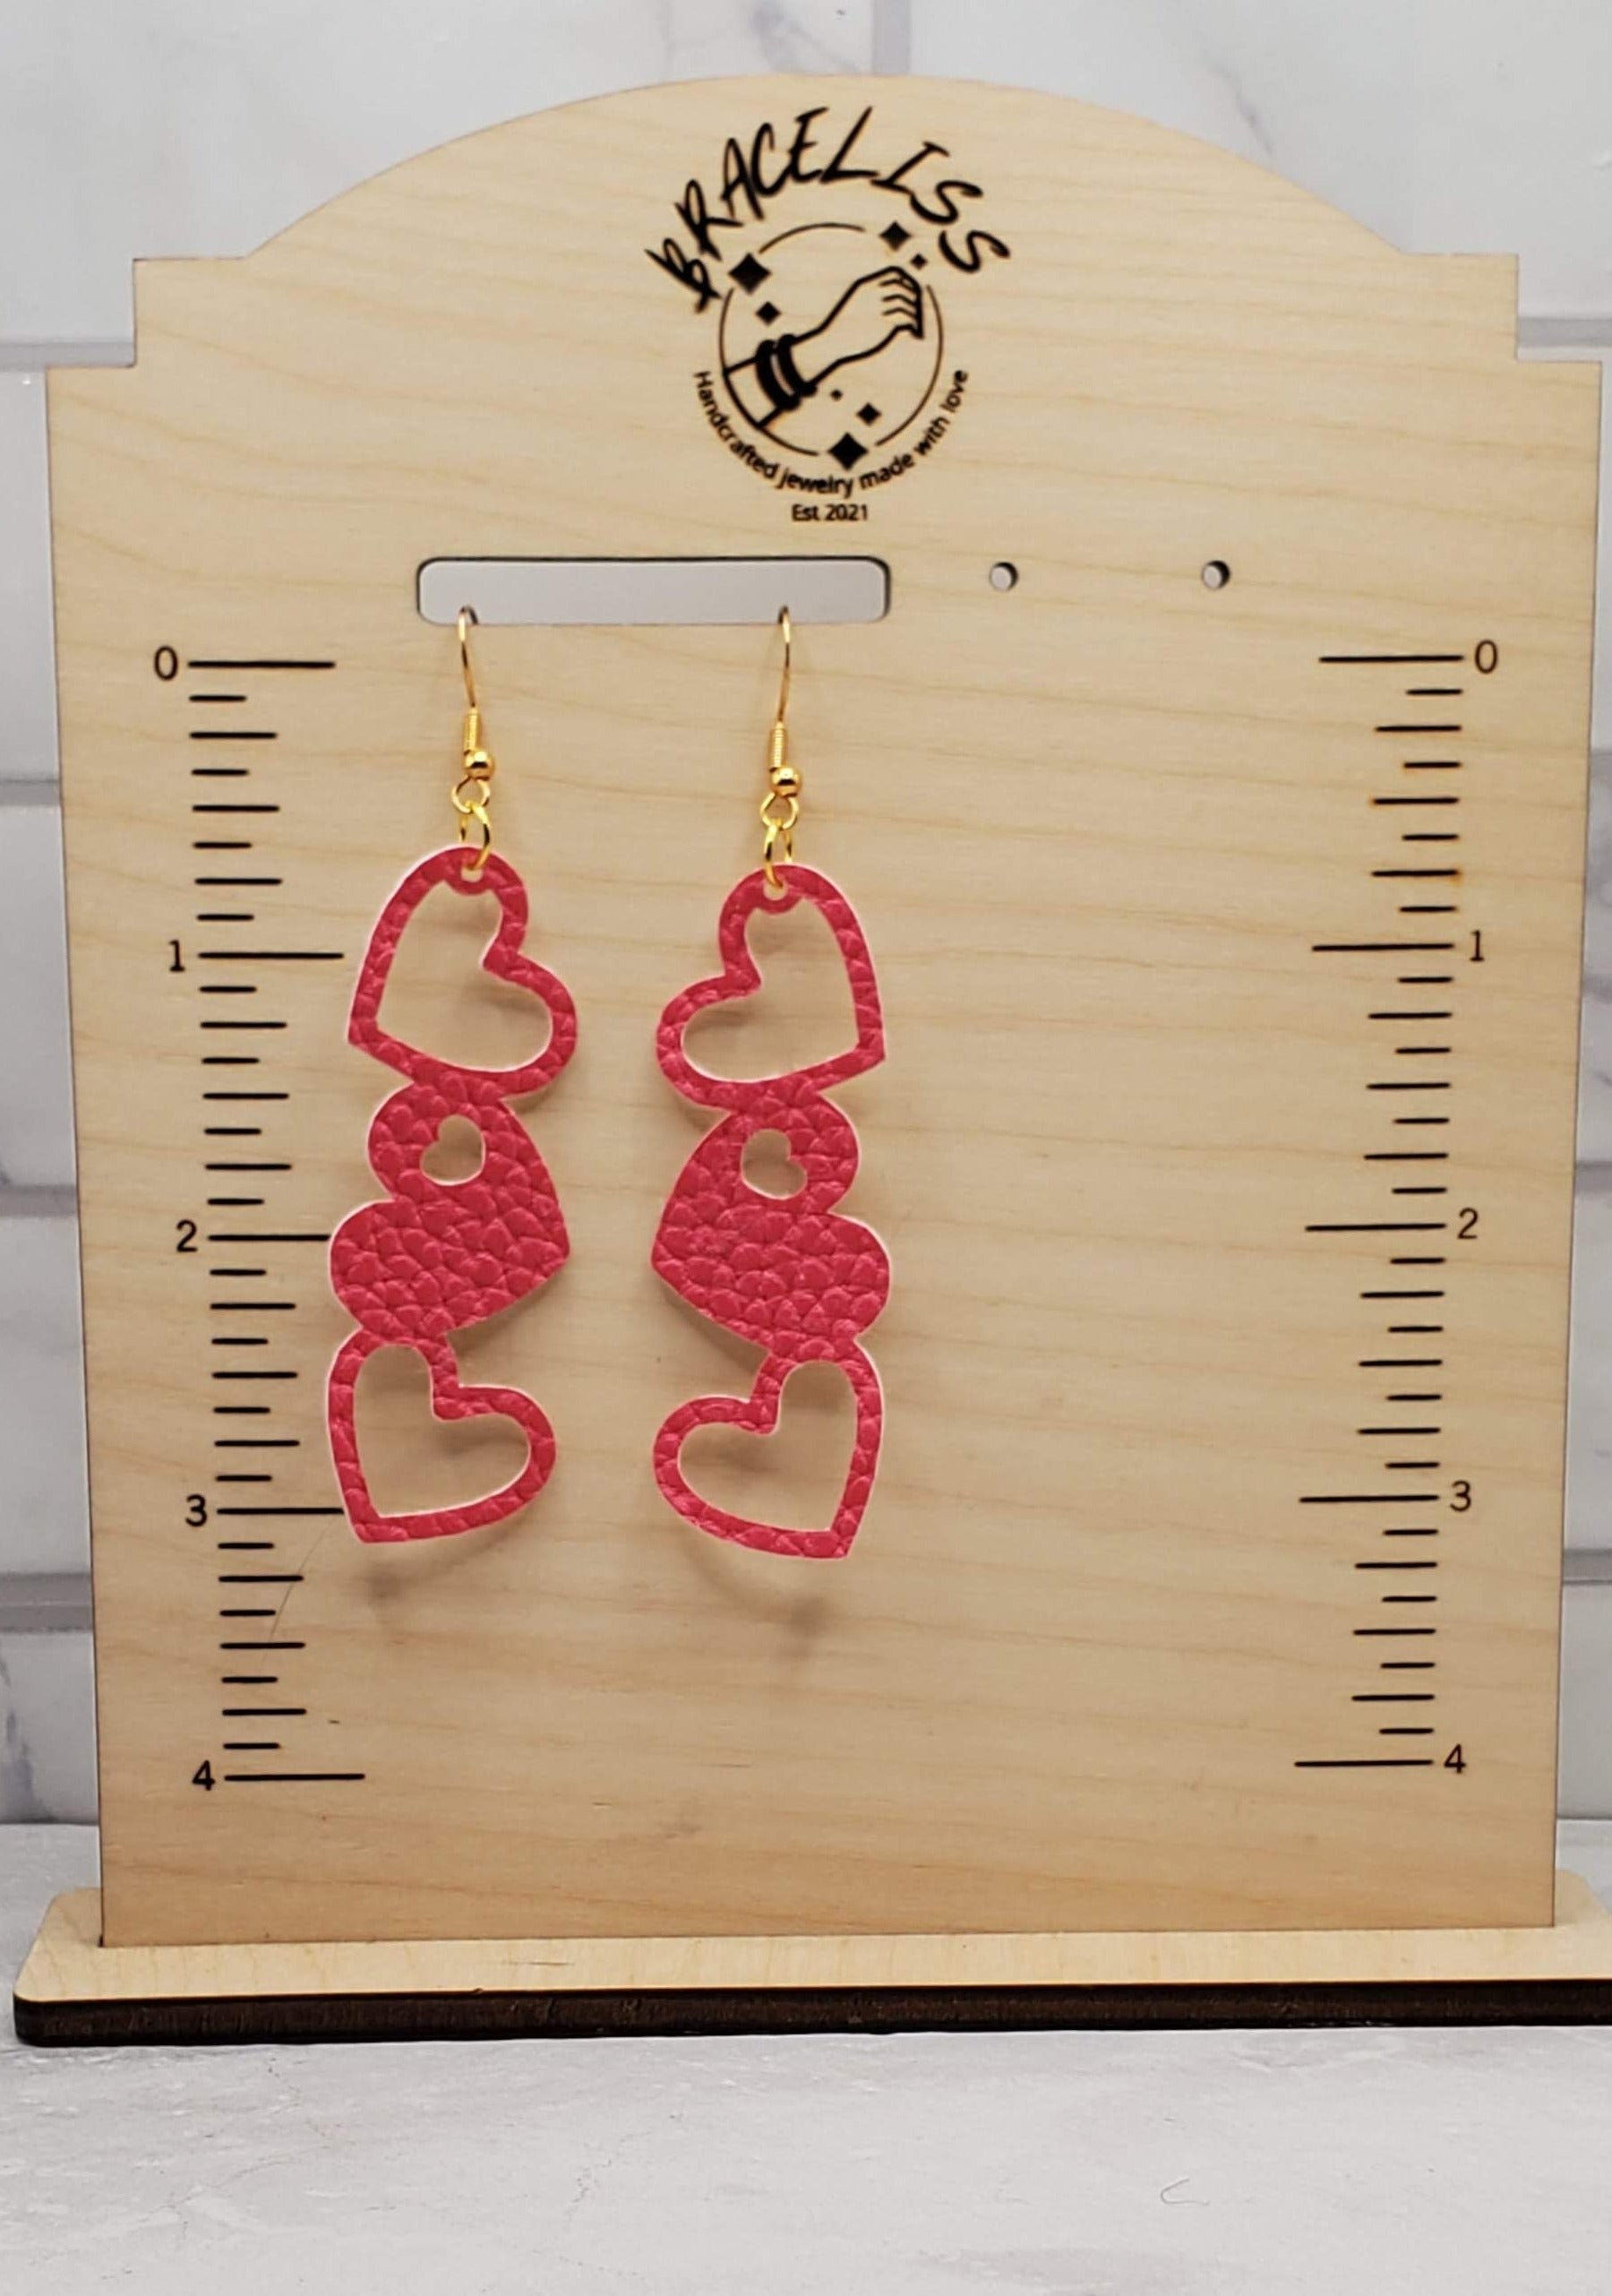 Hollow heart trio | dark pink faux leather drop earrings on measuring display | Braceliss